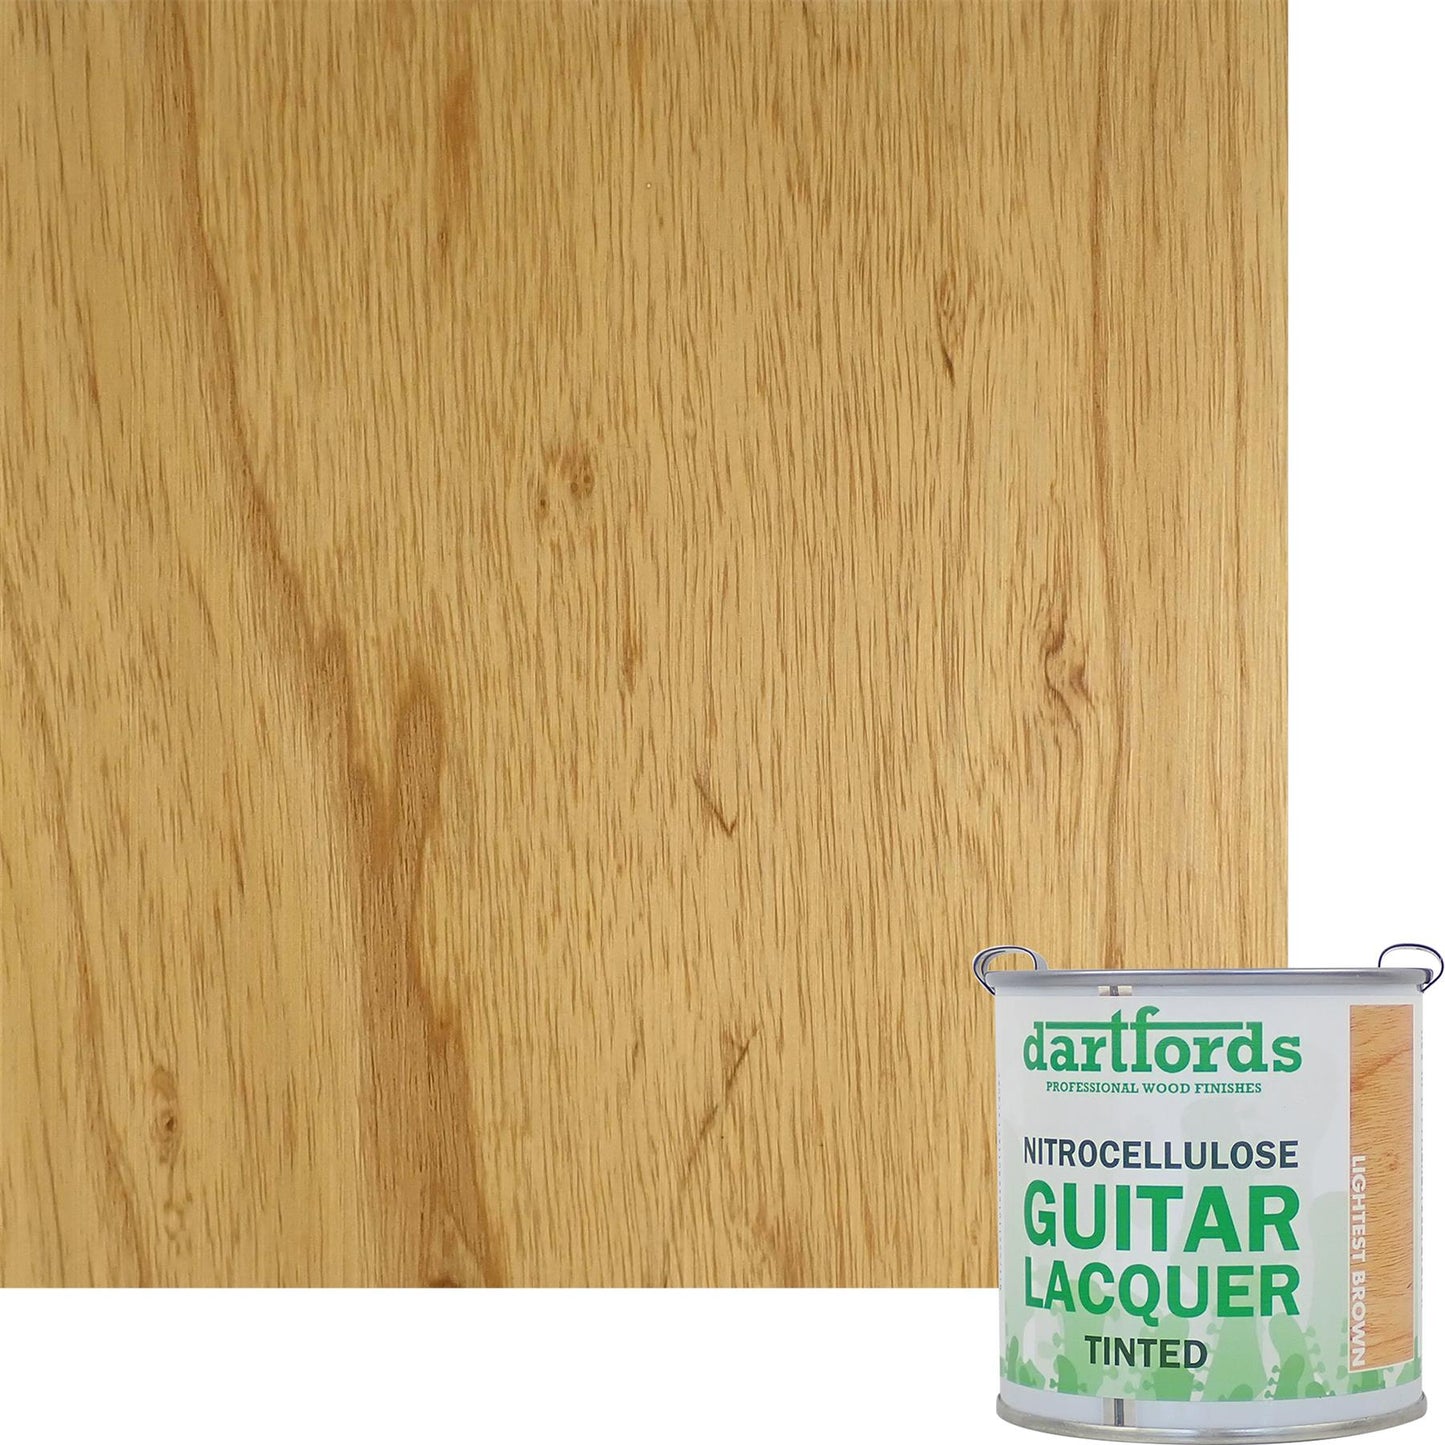 dartfords Lightest Brown Nitrocellulose Guitar Lacquer - 230ml Tin